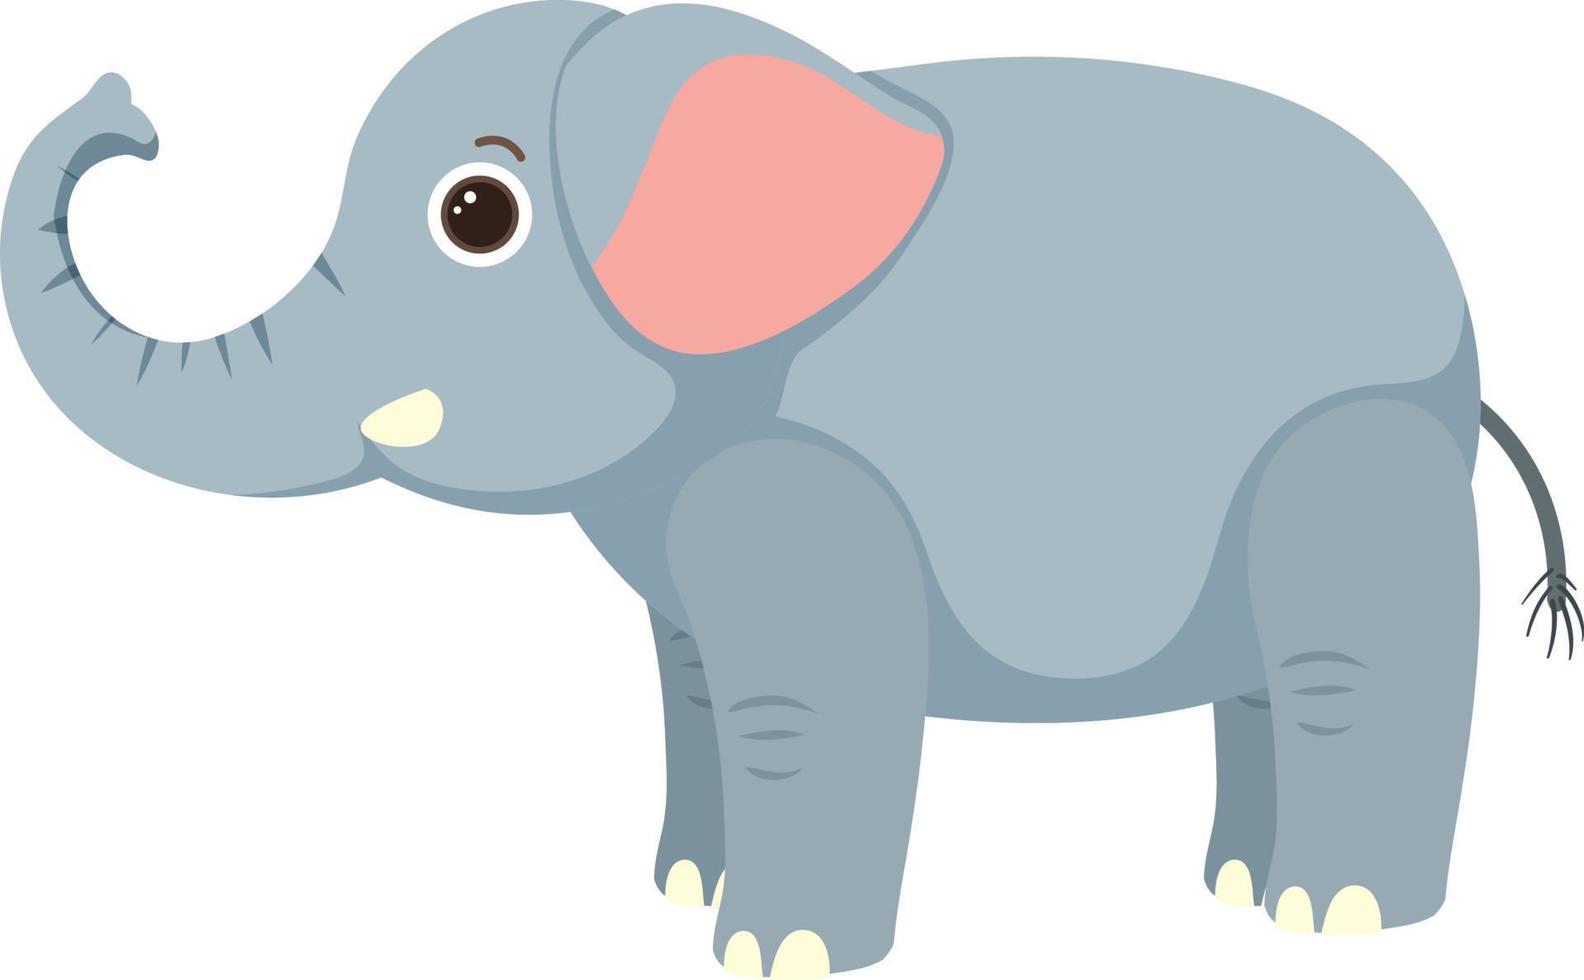 Cute elephant in flat cartoon style vector